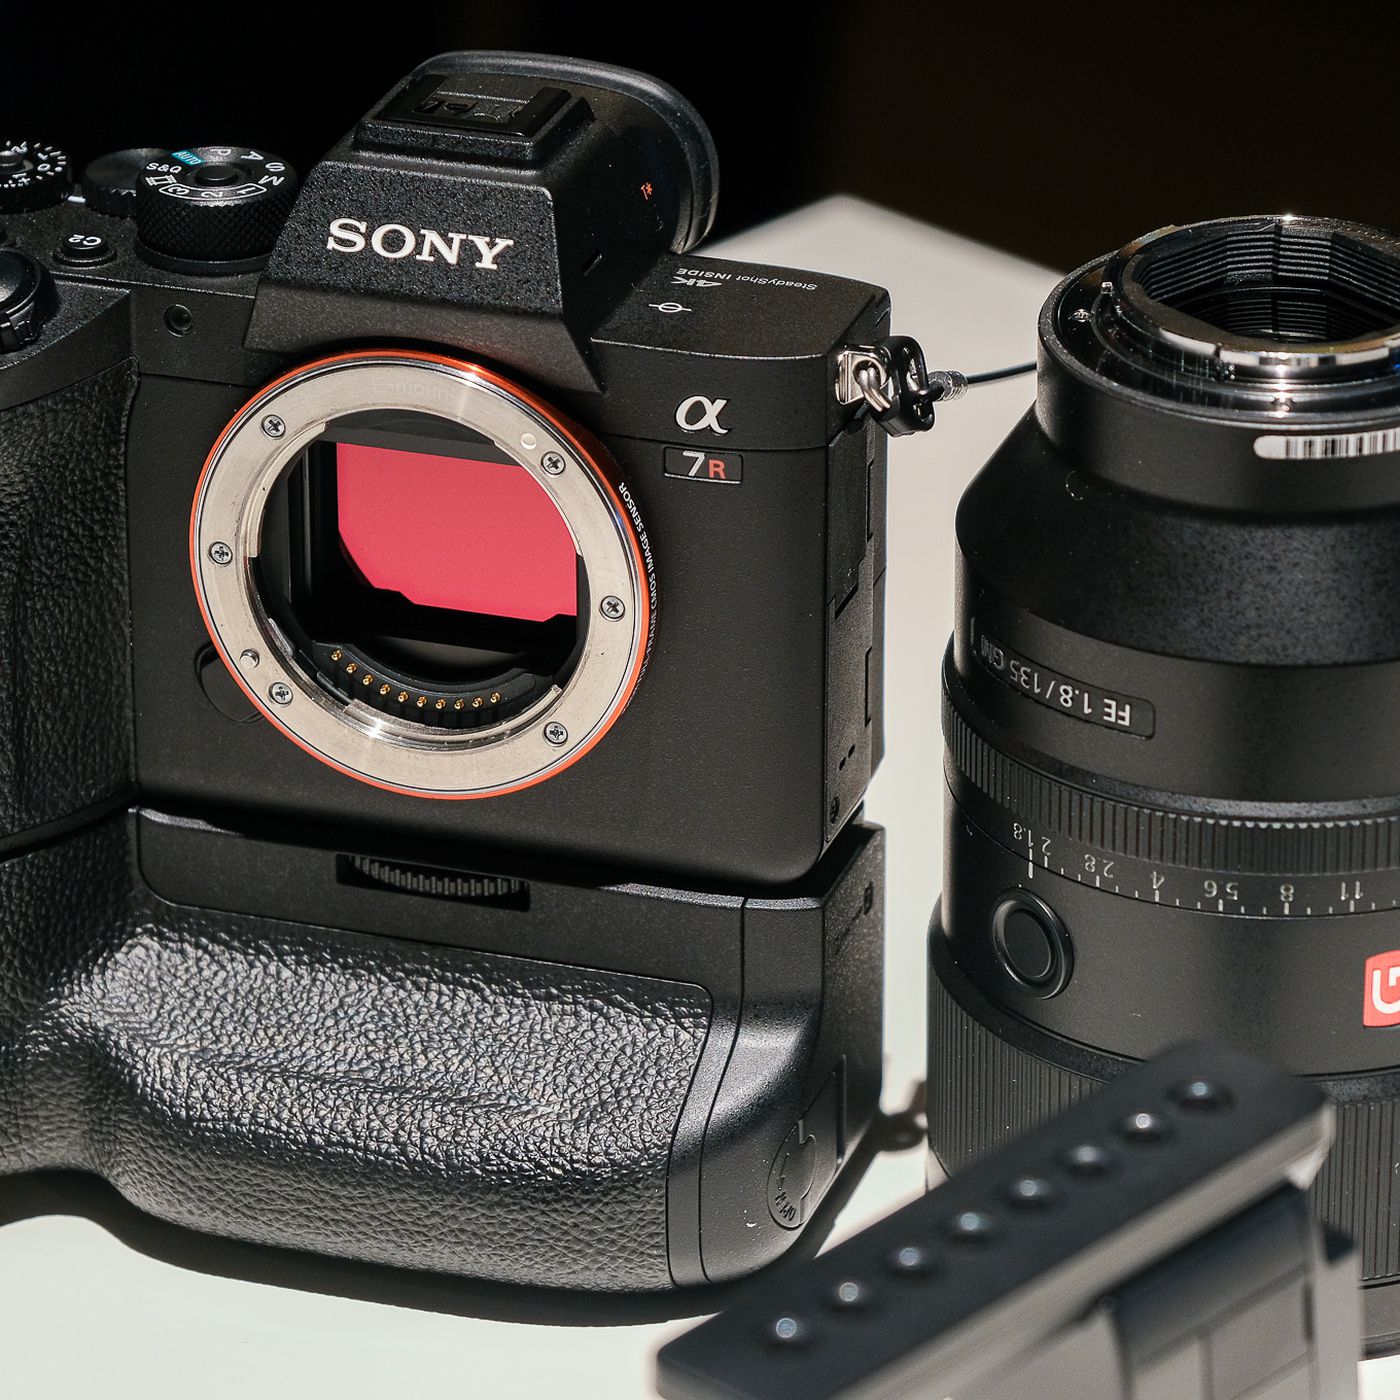 Sony Image sensor Cameras Keep Sony Afloat As TV, Audio, PS5 Struggle